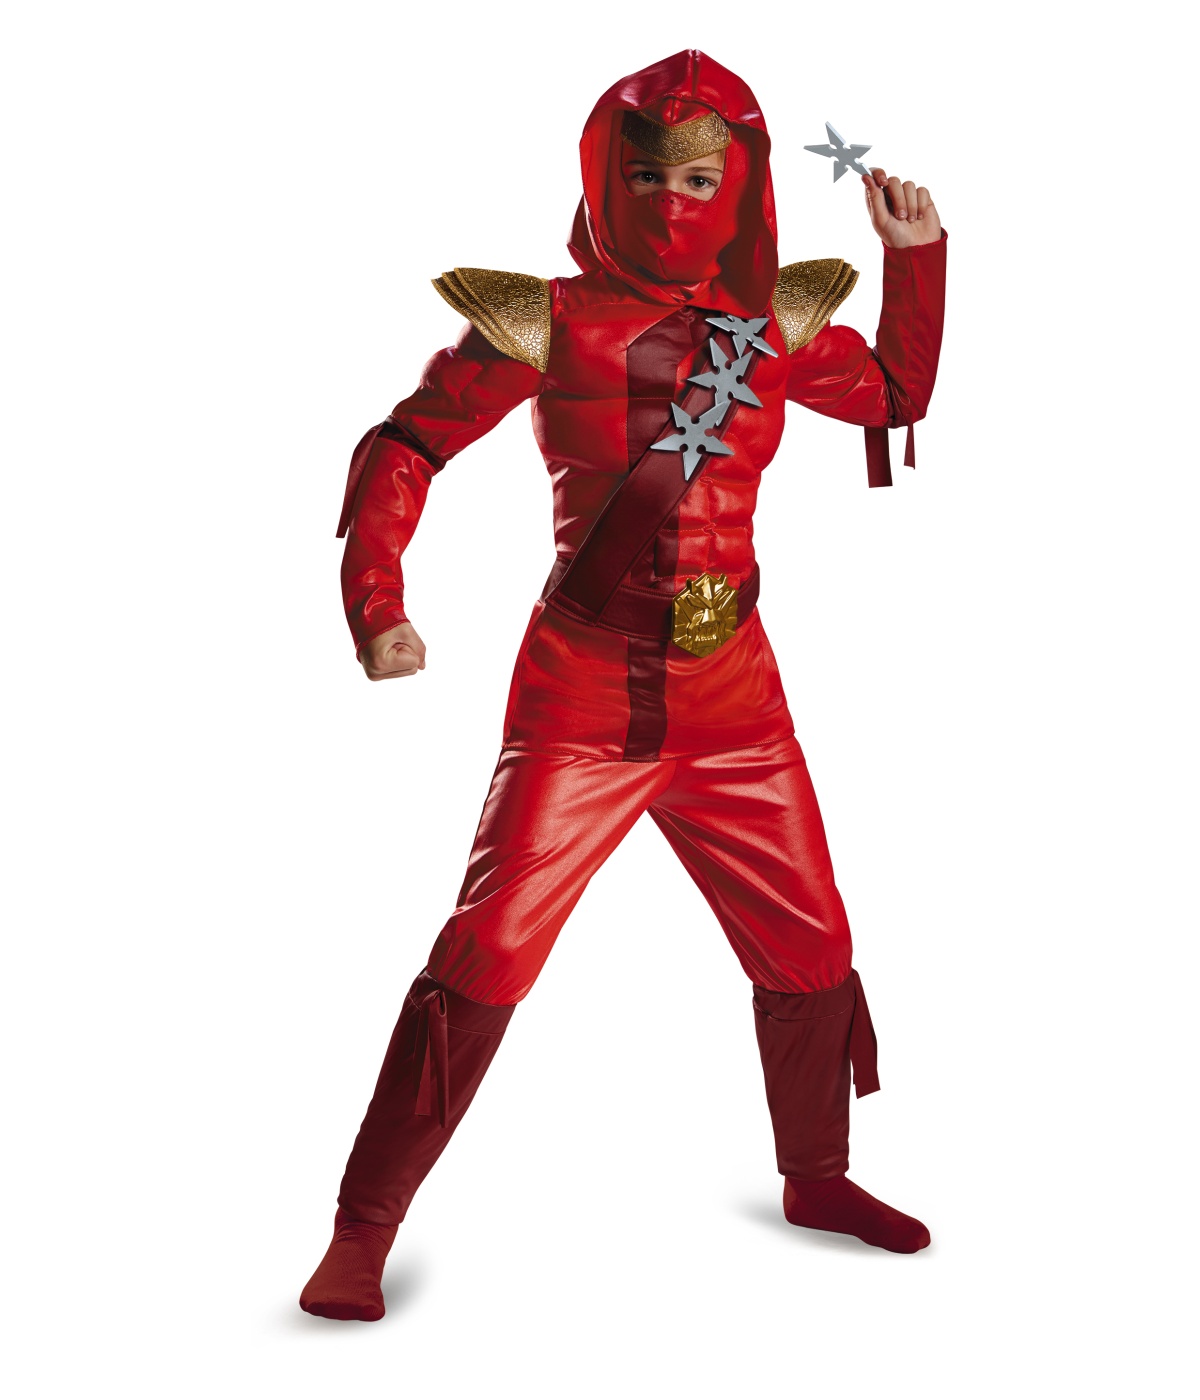  Boys Fiery Red Ninja Costume